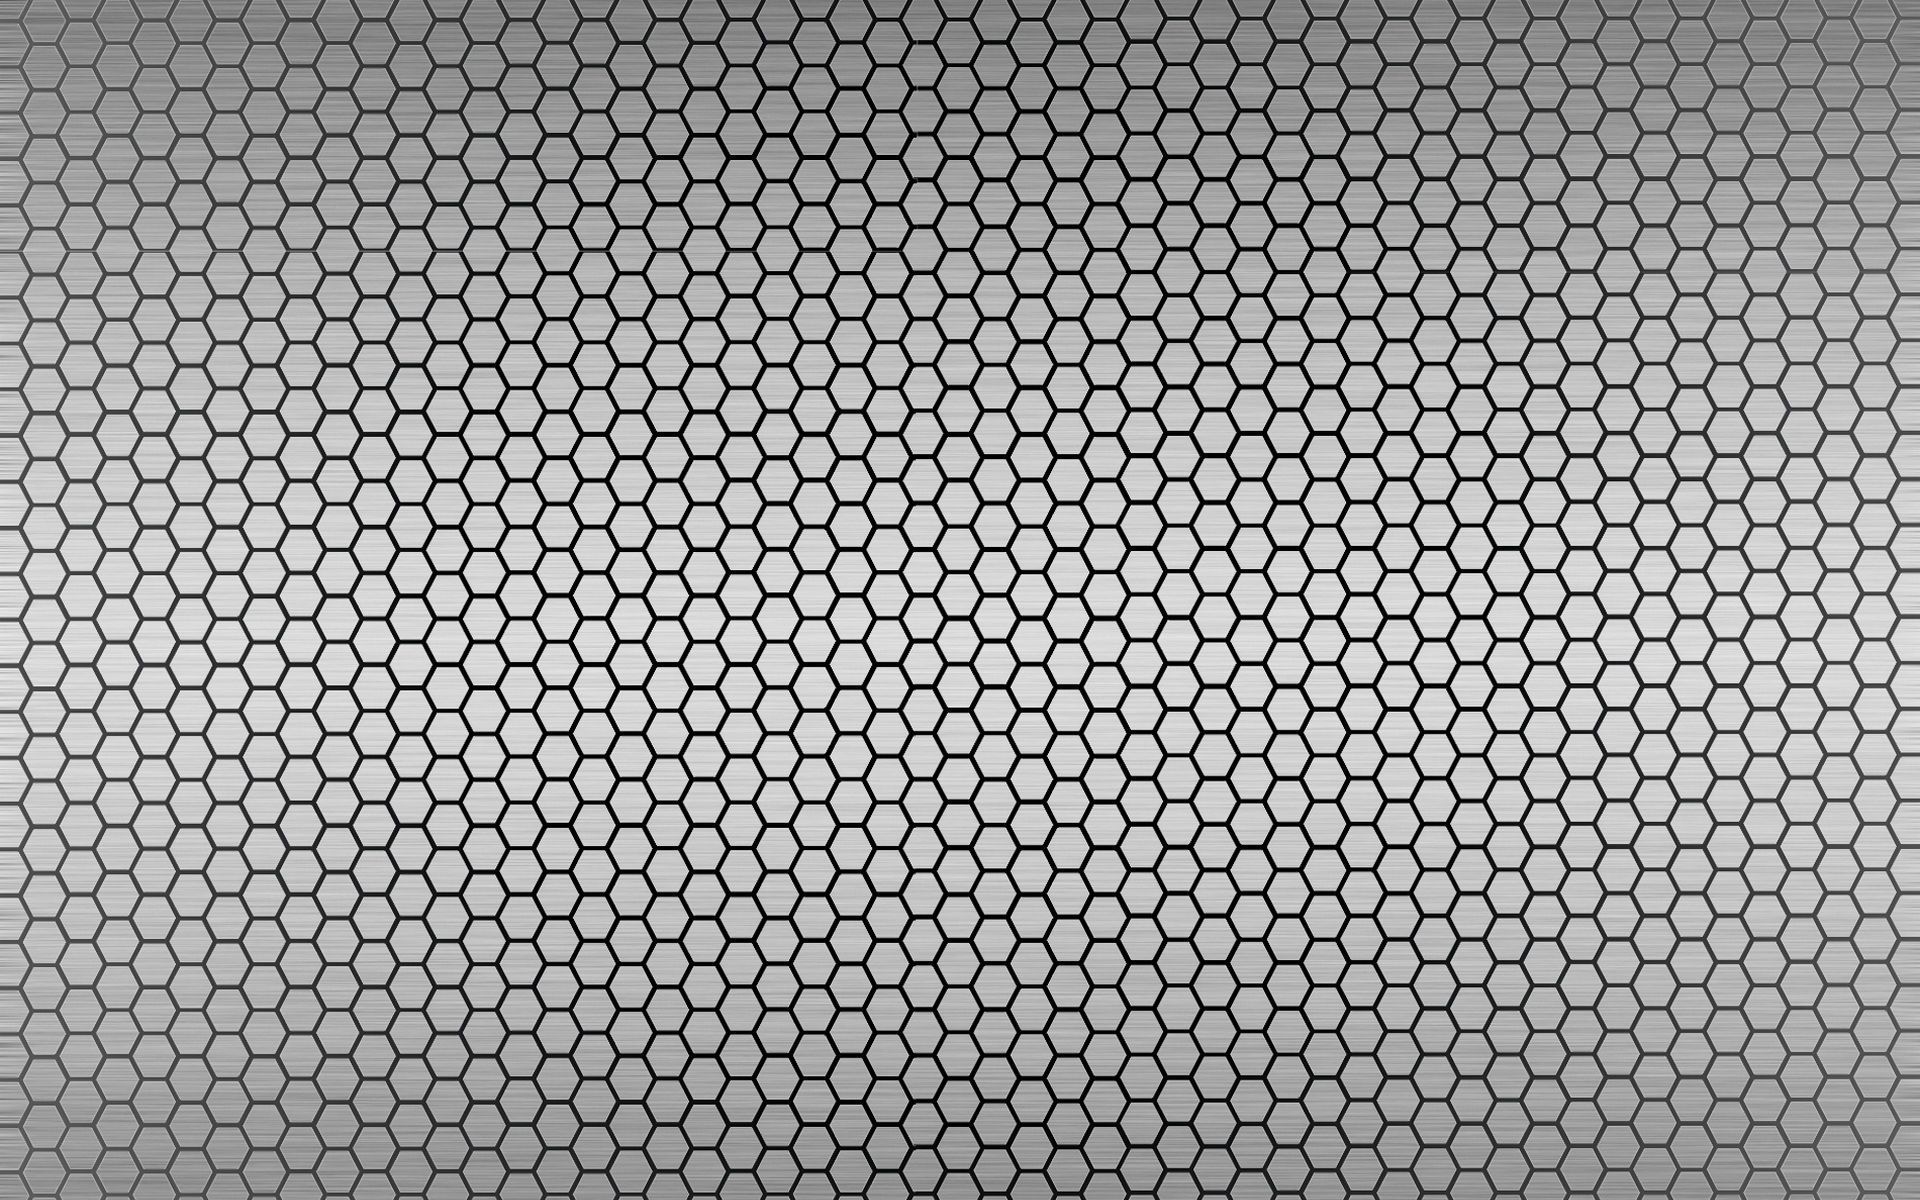 free-download-honeycomb-pattern-widescreen-wallpaper-4699-1920x1200